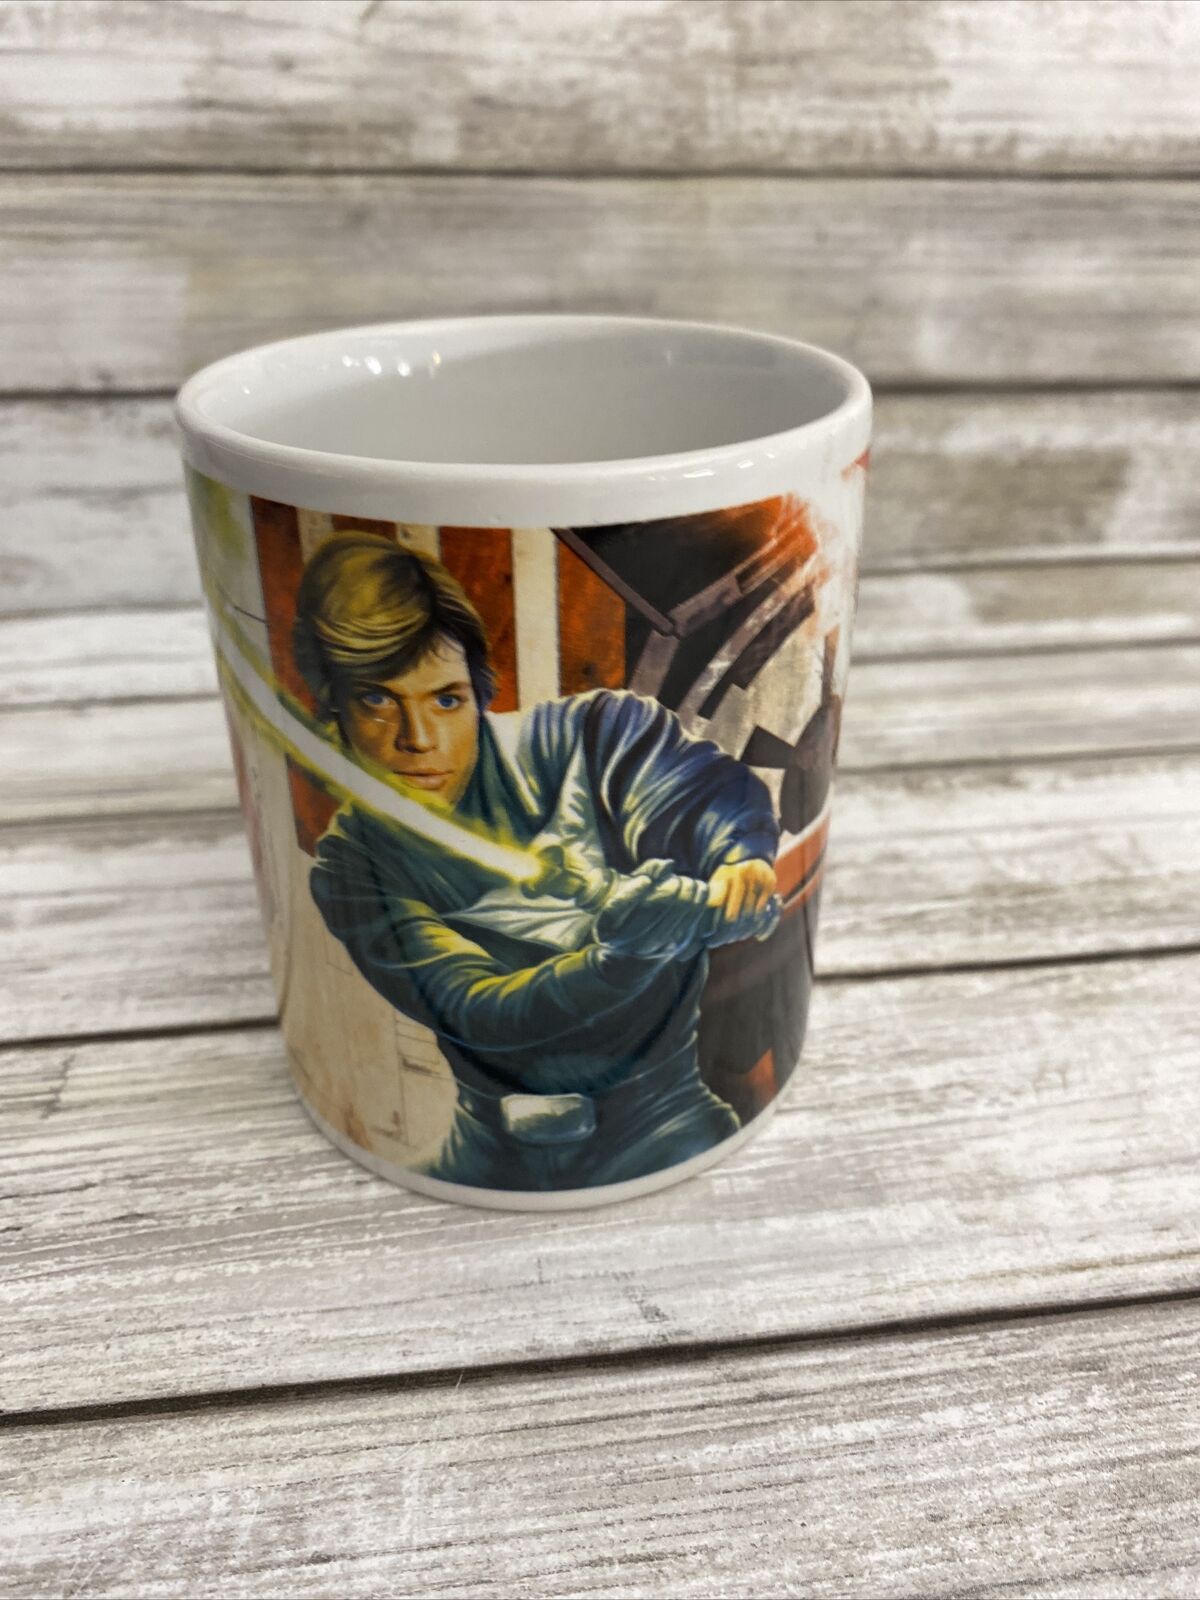 Galerie Star Wars Coffee Mug Cup Darth Vader Luke Skywalker LightSaber Fight